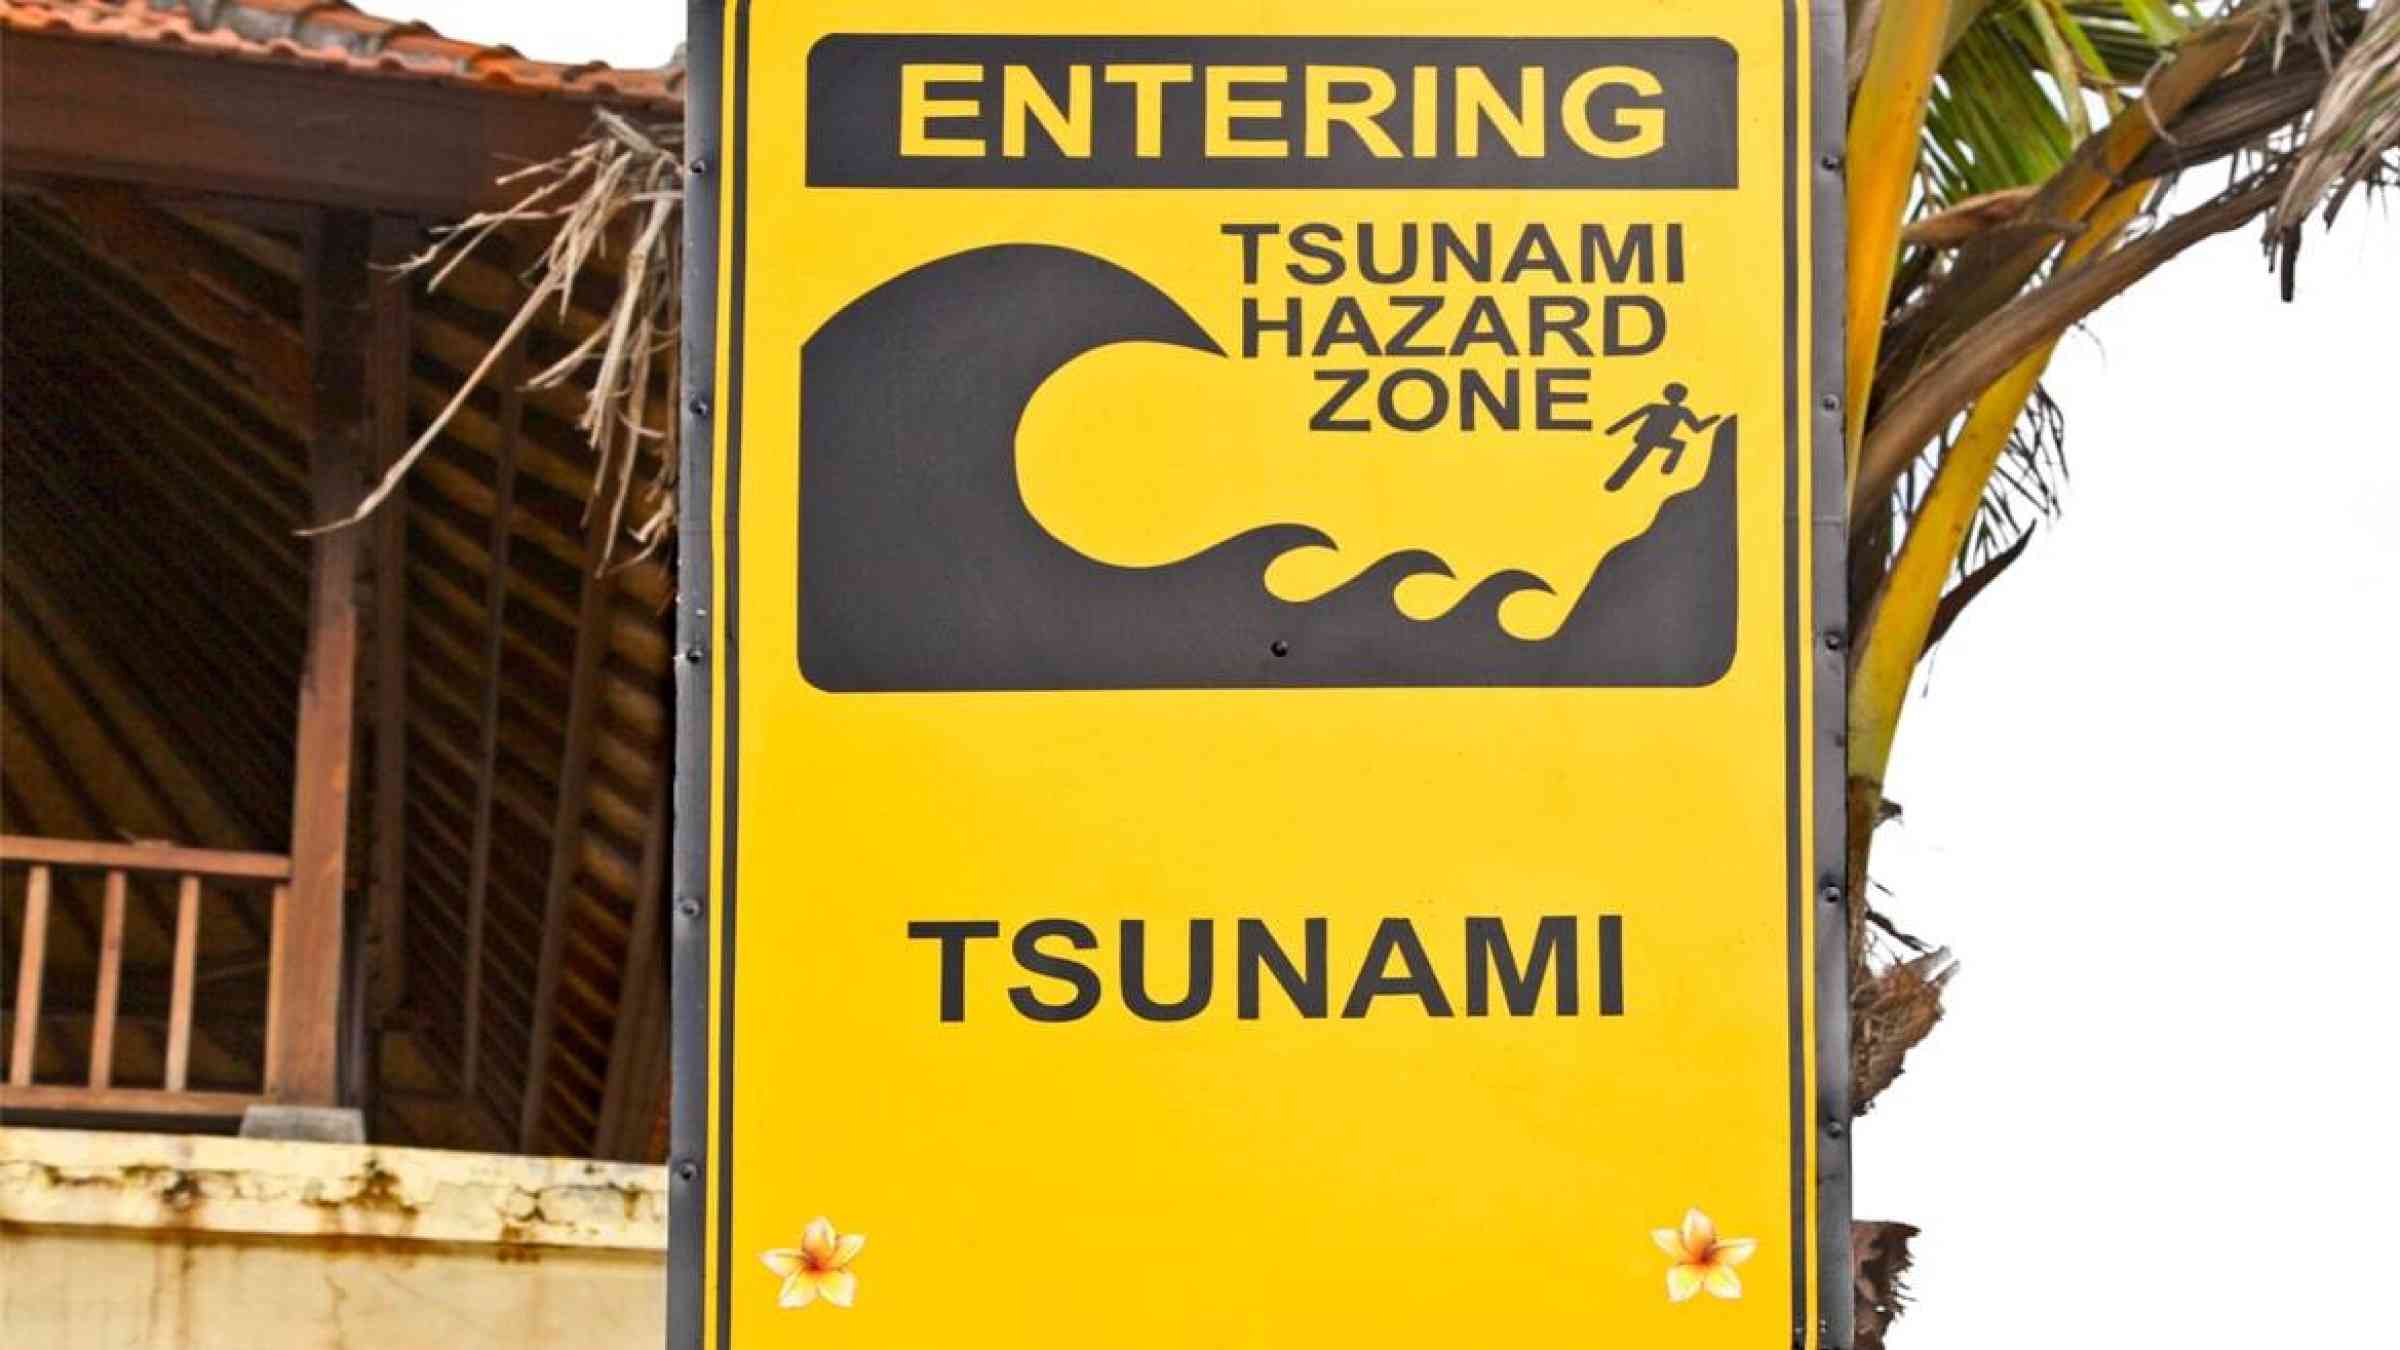 Yellow tsunami hazard zone warning sign in Bali, Indonesia